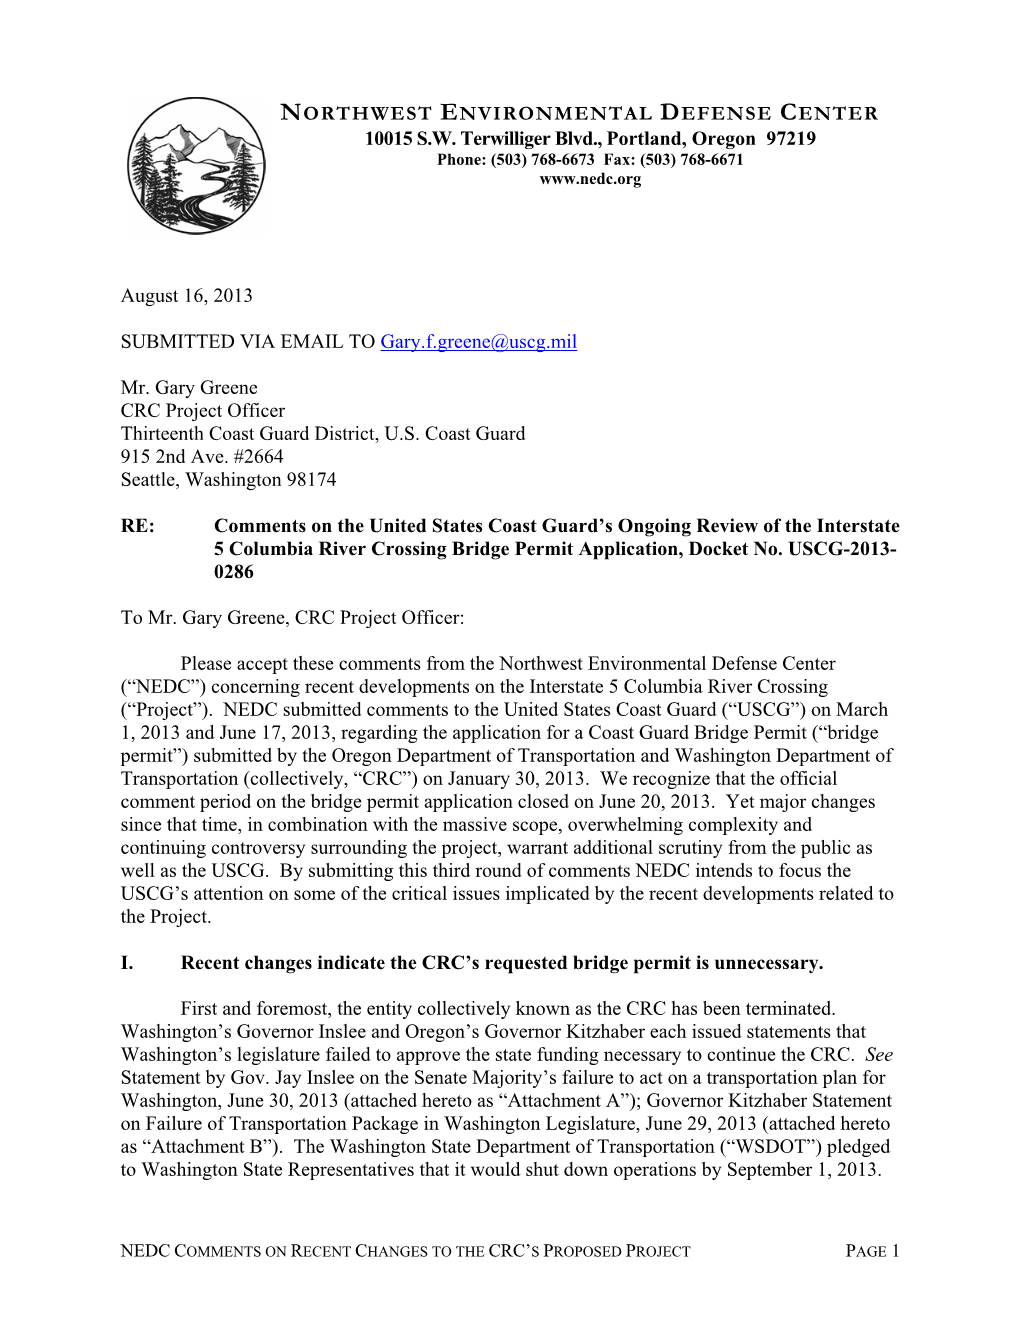 U.S. Coast Guard Bridge Permit Application, Ongoing Review